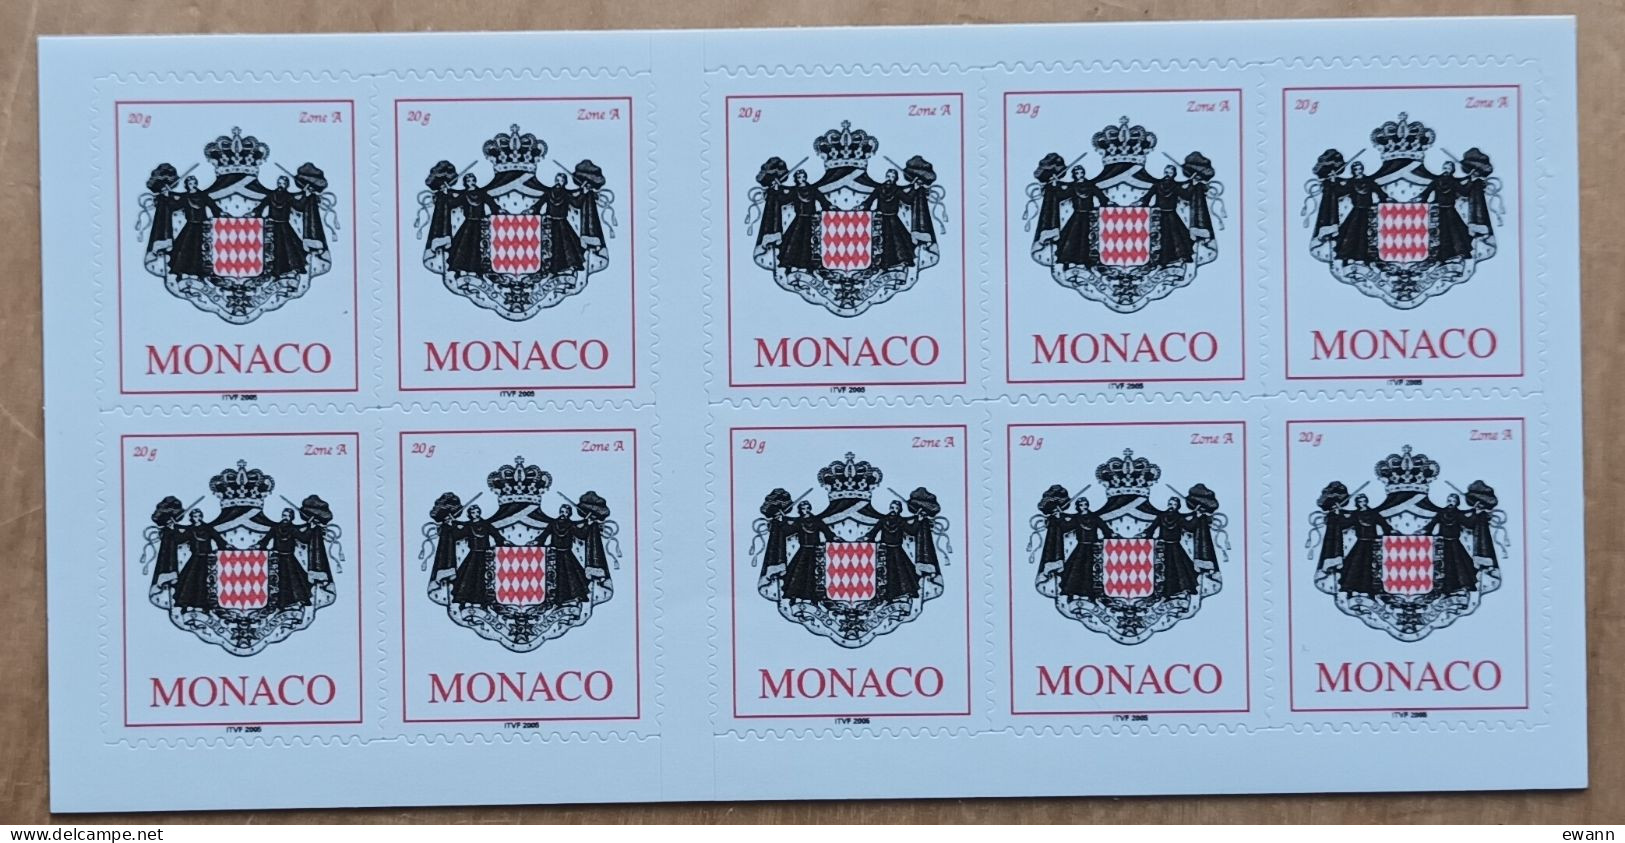 Monaco - Carnet YT N°15 - Armoiries - 2006 - Neuf - Markenheftchen